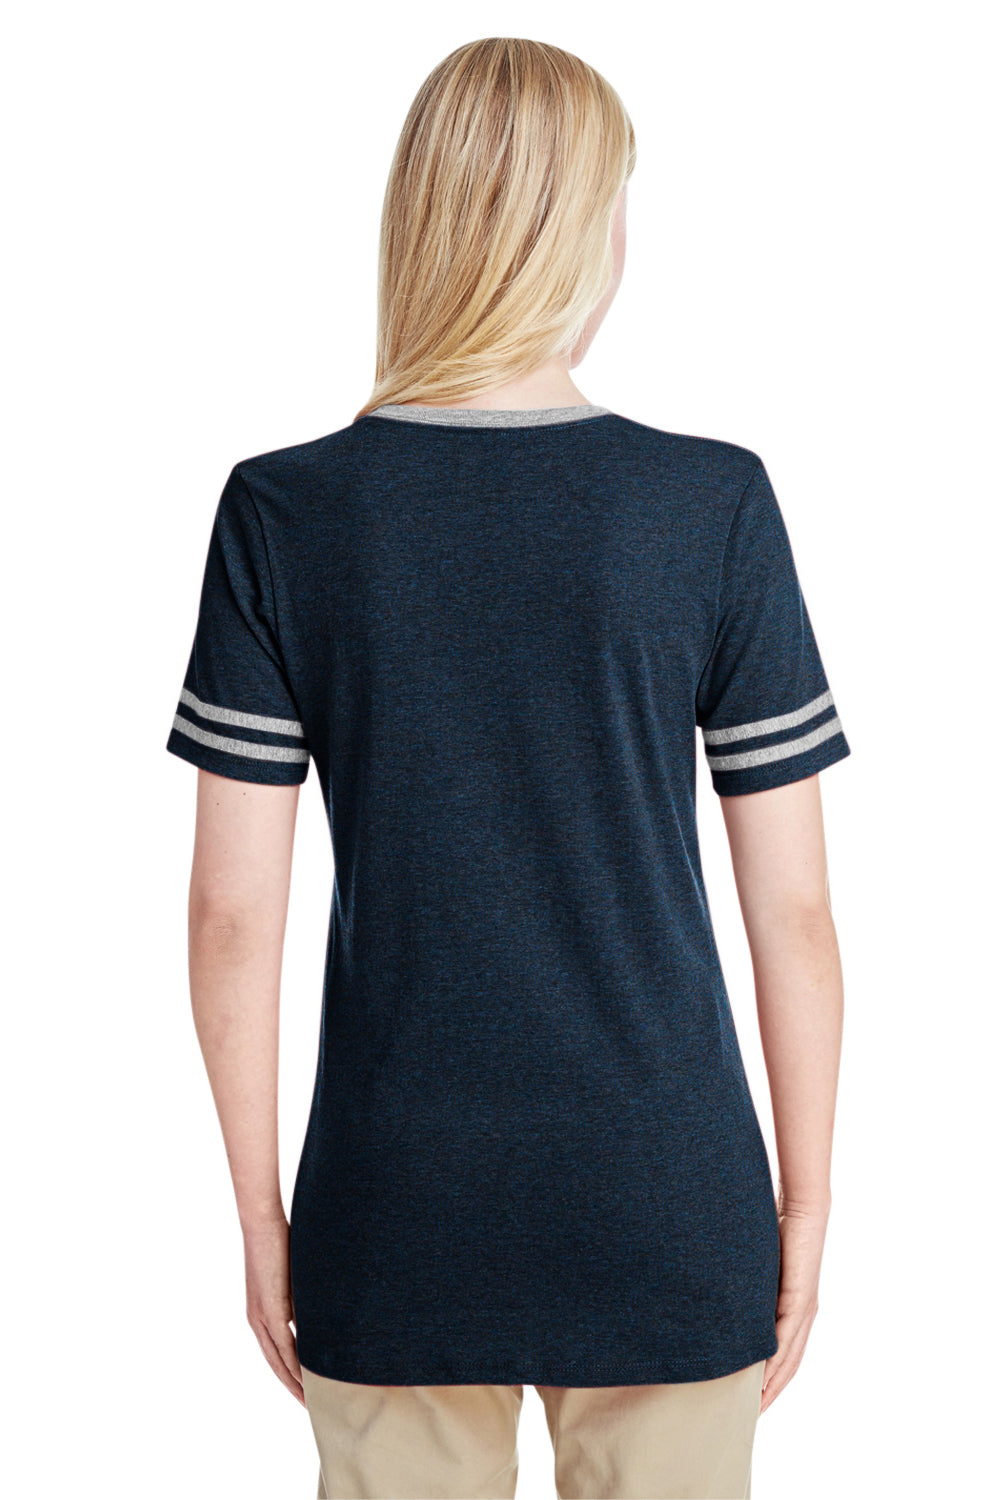 Jerzees 602WVR Womens Varsity Ringer Short Sleeve V-Neck T-Shirt Heather Indigo Blue/Oxford Grey Back